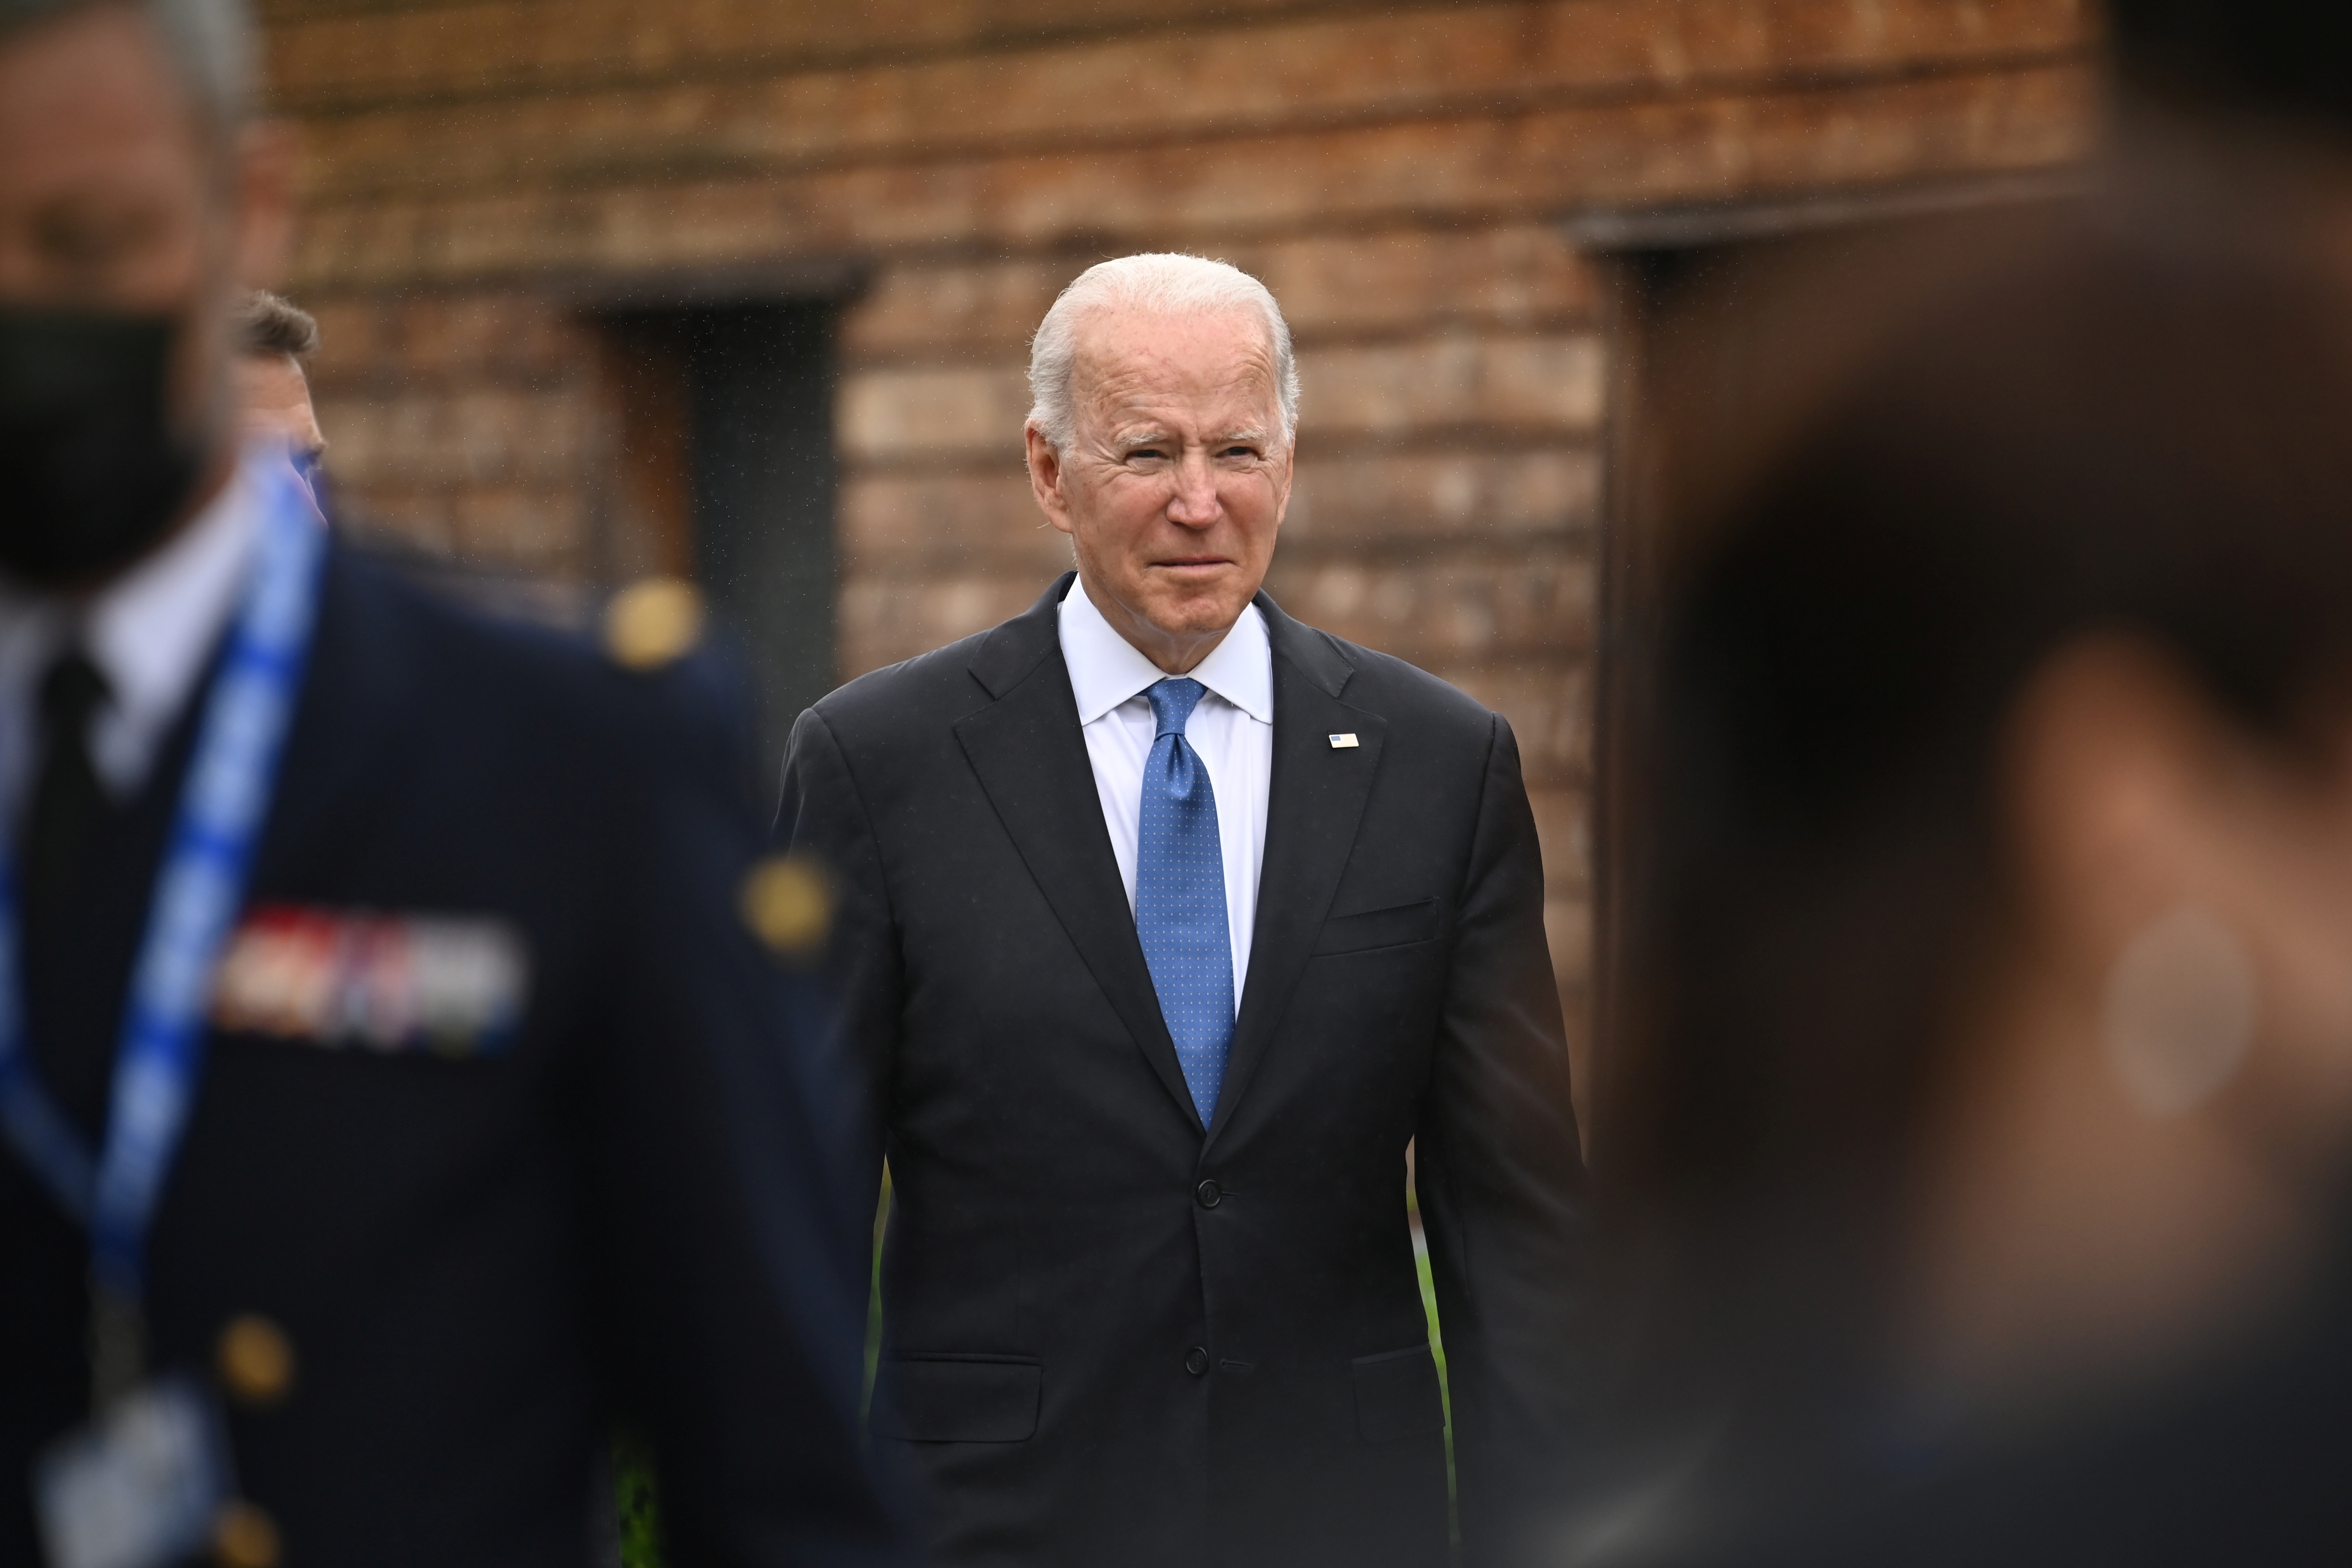 &copy; Reuters. FILE PHOTO: U.S. President Joe Biden walks between engagements at the G7 summit in Carbis Bay, Cornwall, Britain, June 11, 2021. Leon Neal/Pool via REUTERS